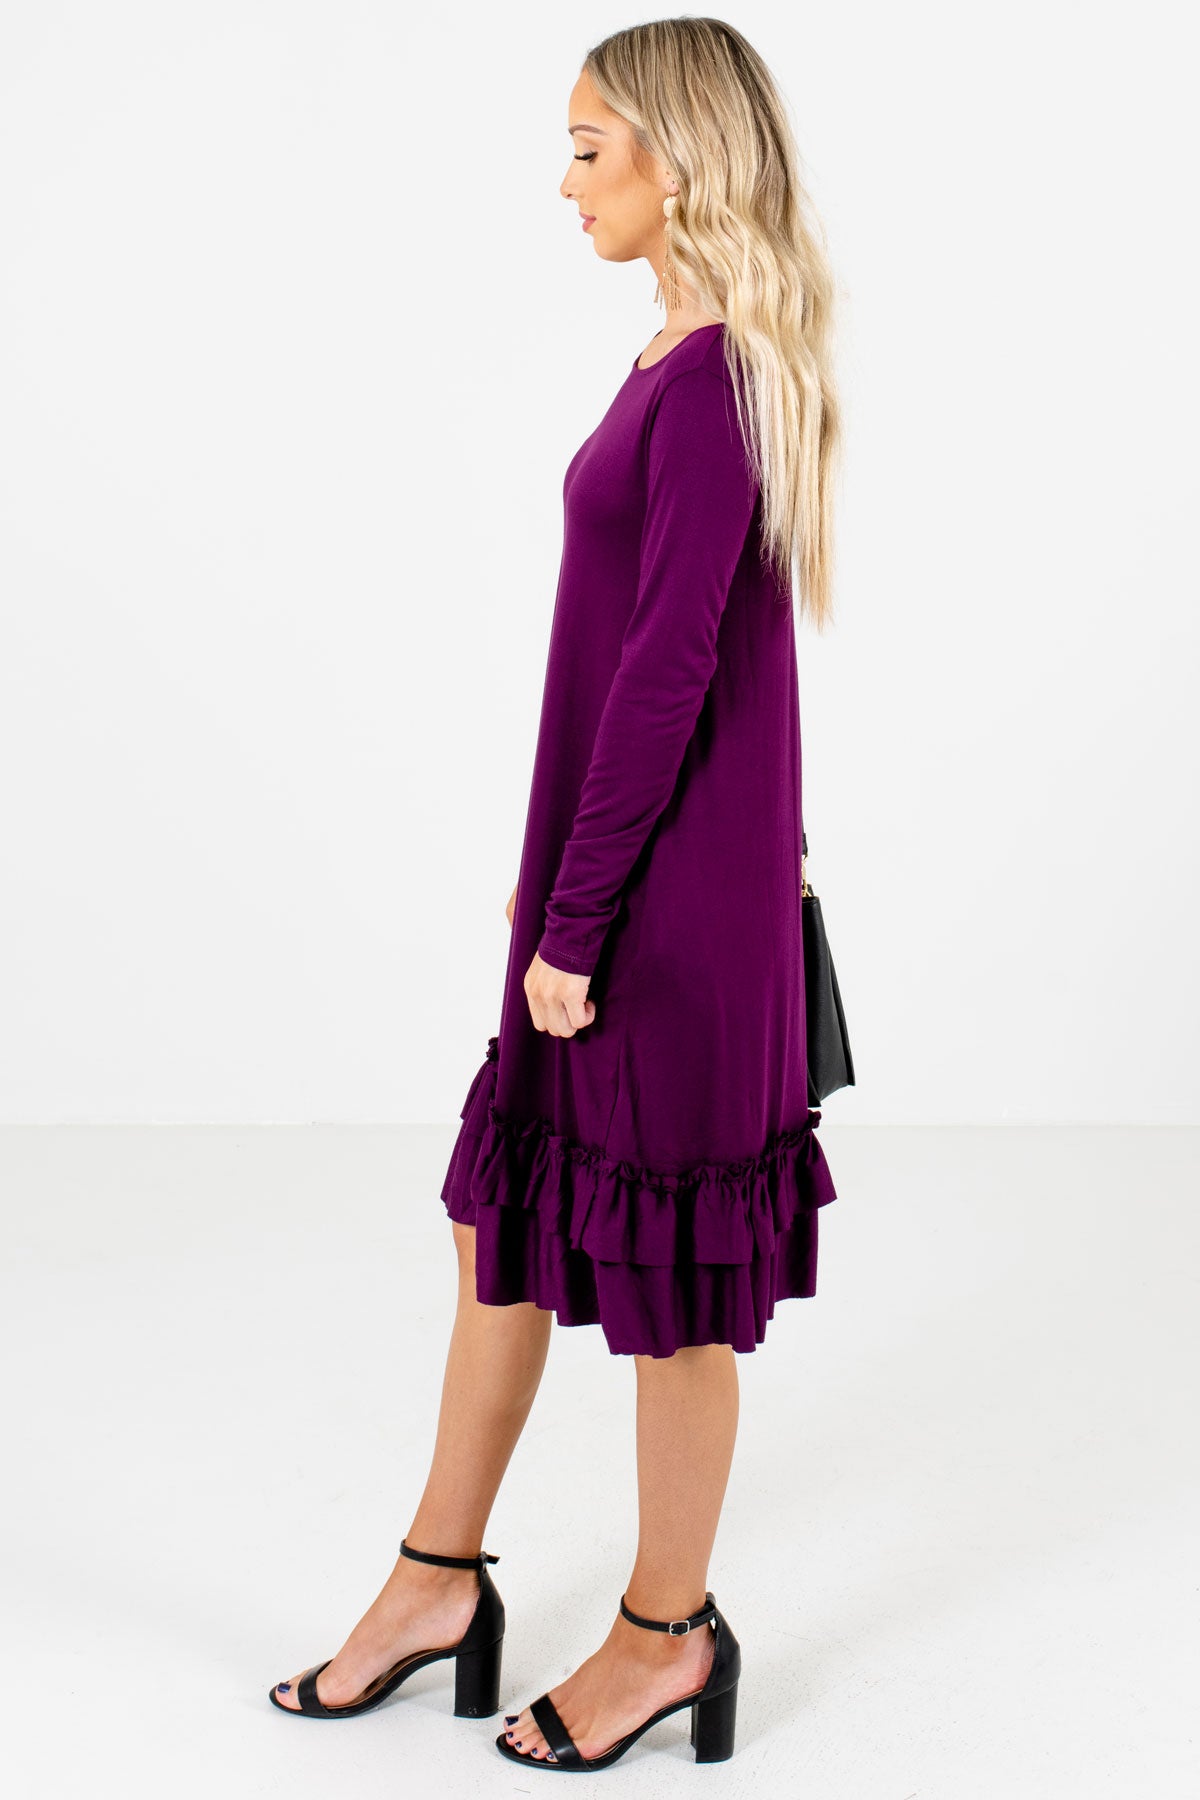 Purple Round Neckline Boutique Knee-Length Dresses for Women